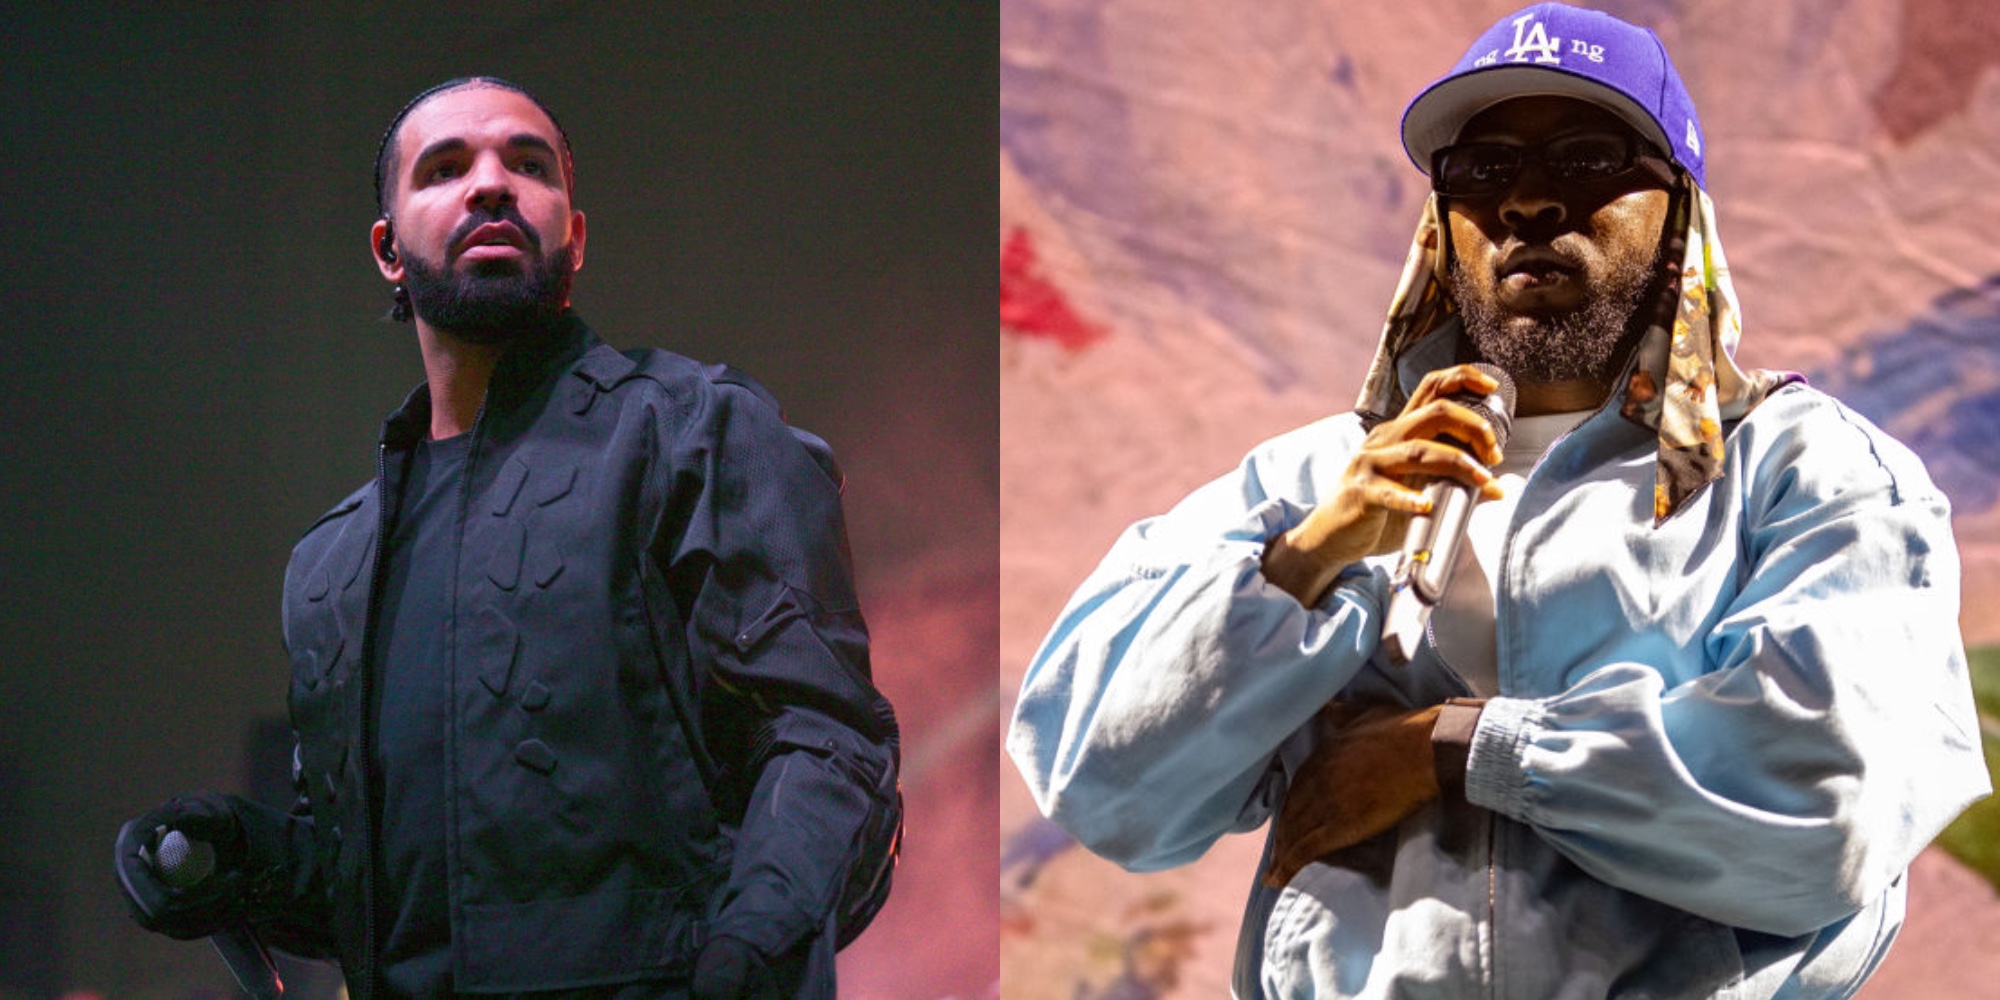 Drake and Kendrick